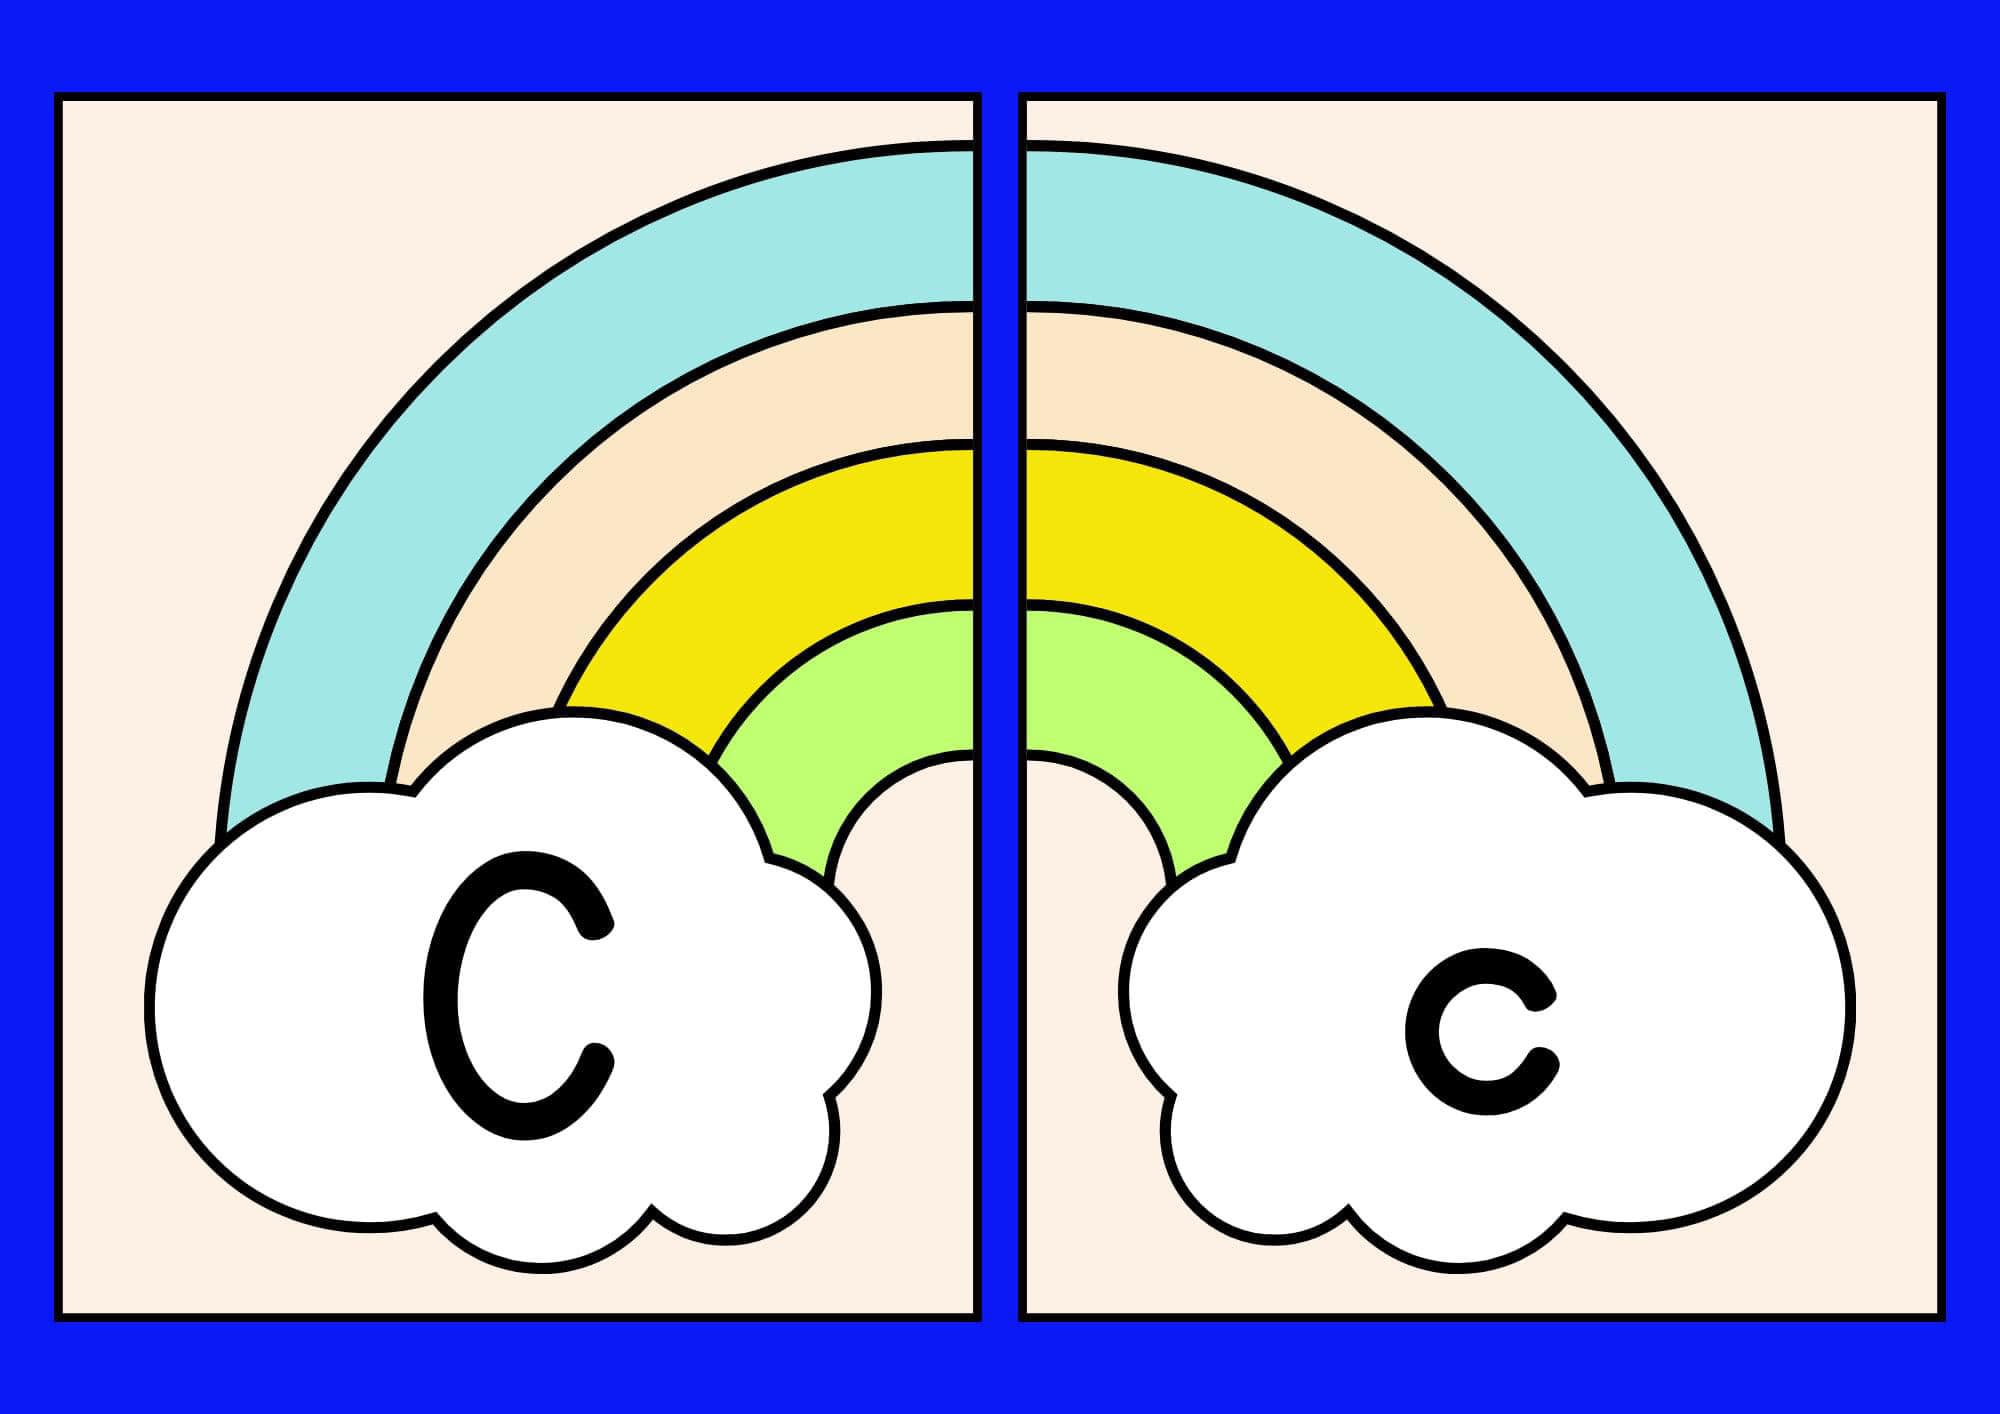 Alfabeto arco íris Cc